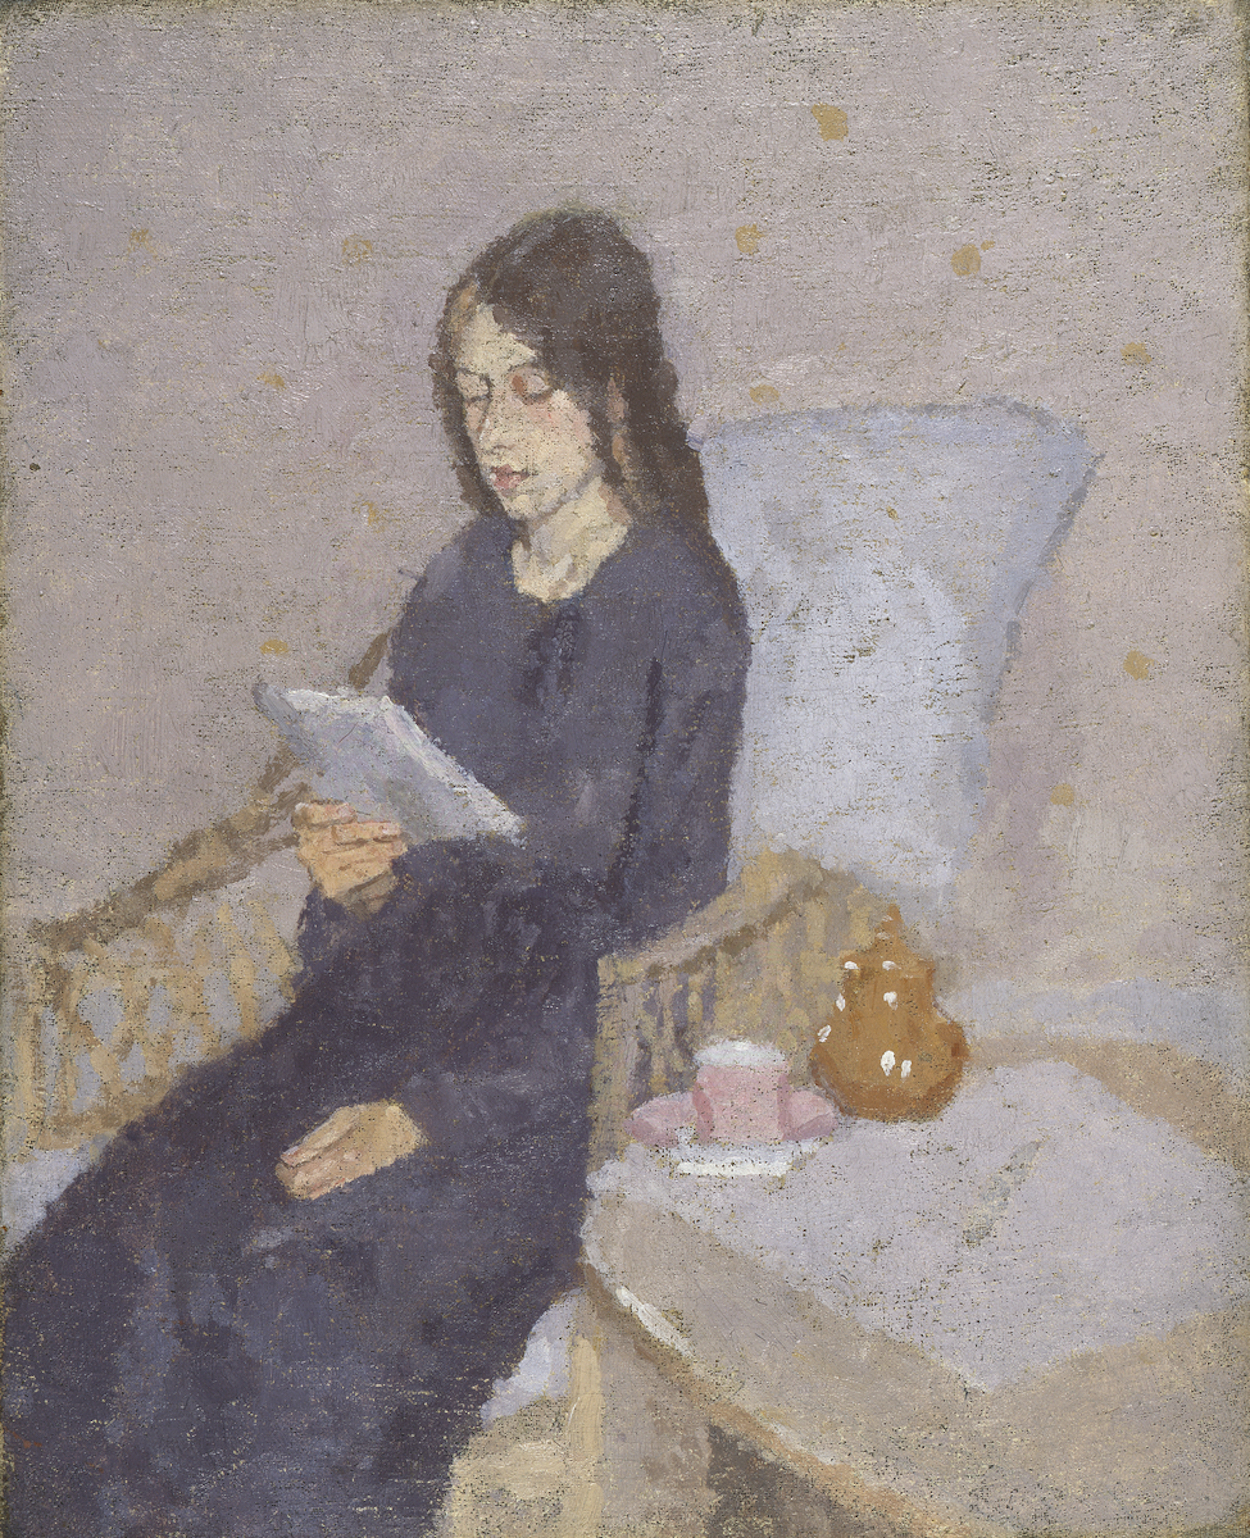 La Lettre by Gwen John - 1924 - 41.1 x 33.2 cm Manchester Art Gallery